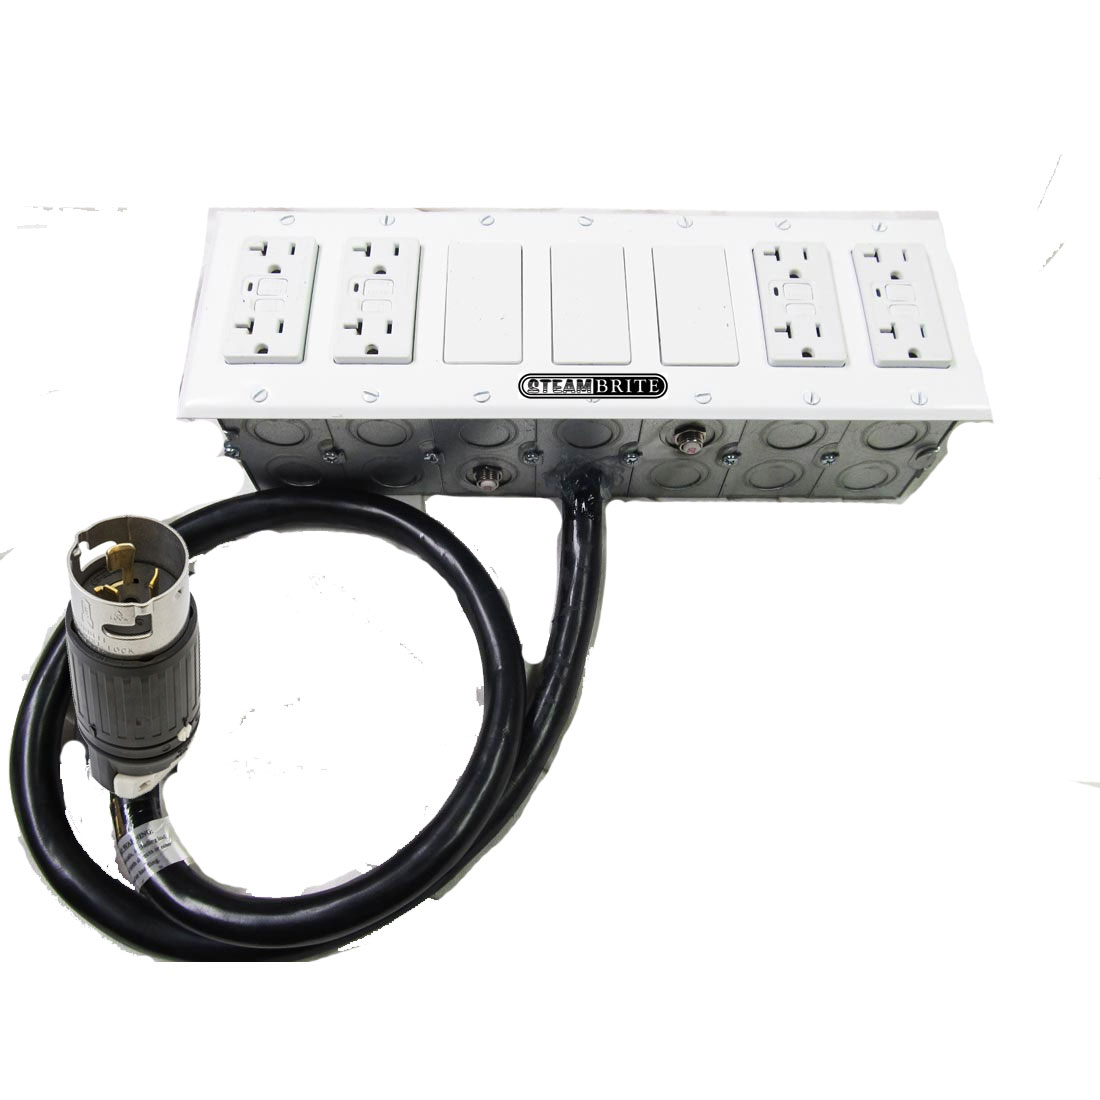 Electrical Converter 240V 4 wire 60 amp CS8269 Plug 120V 4 Gang GFCI 8 outlets Breakers Generator Adapter 73946112